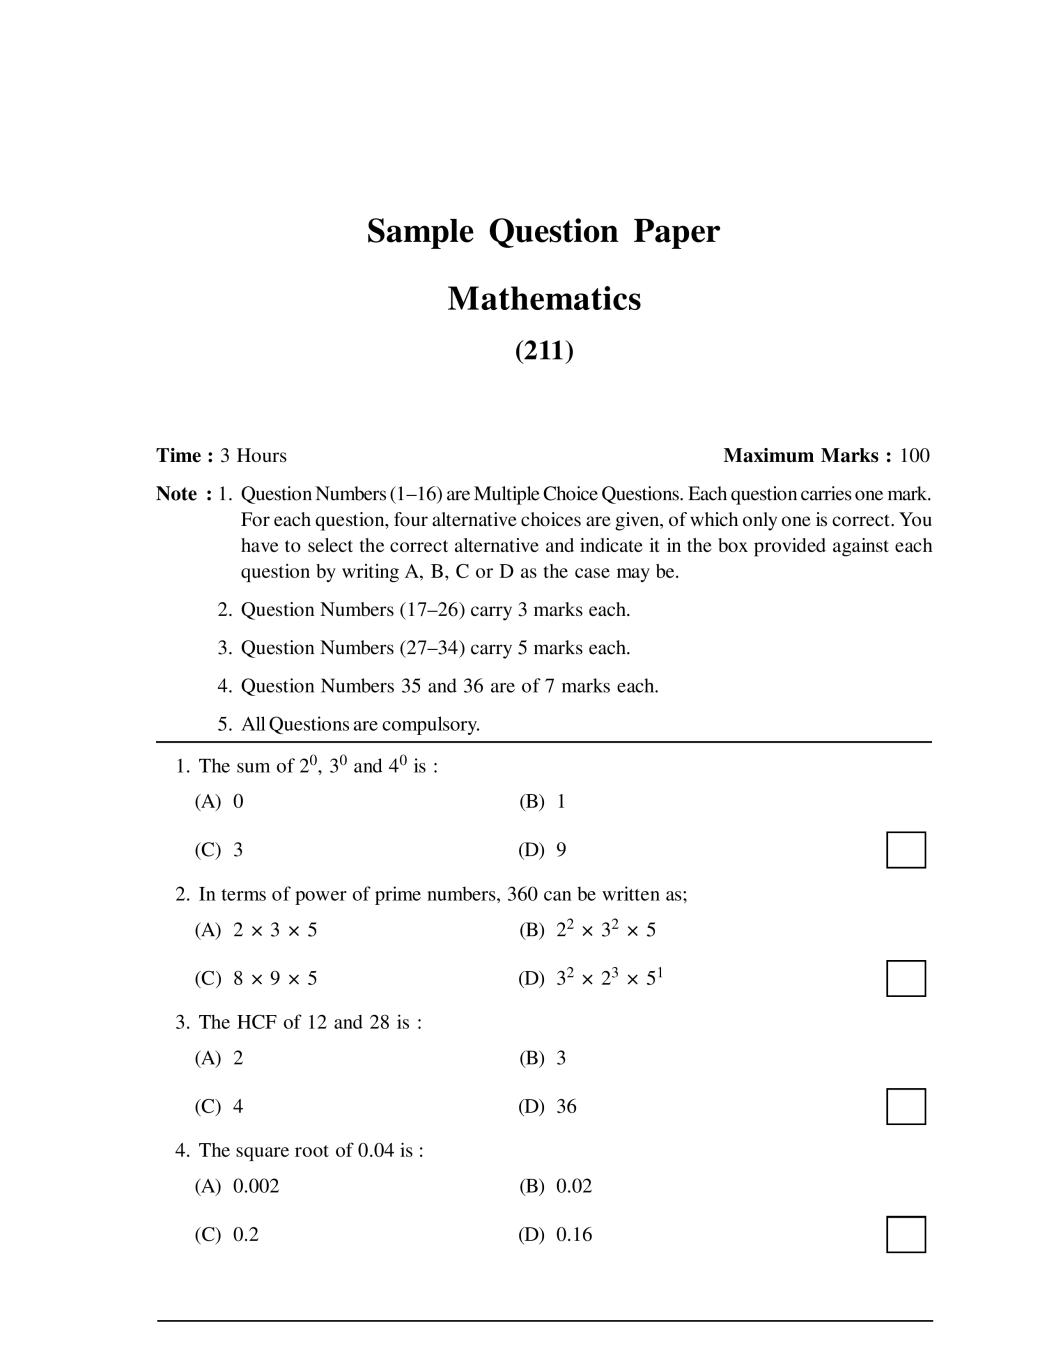 NIOS Class 10 Sample Paper 2020 - Mathematics - Page 1